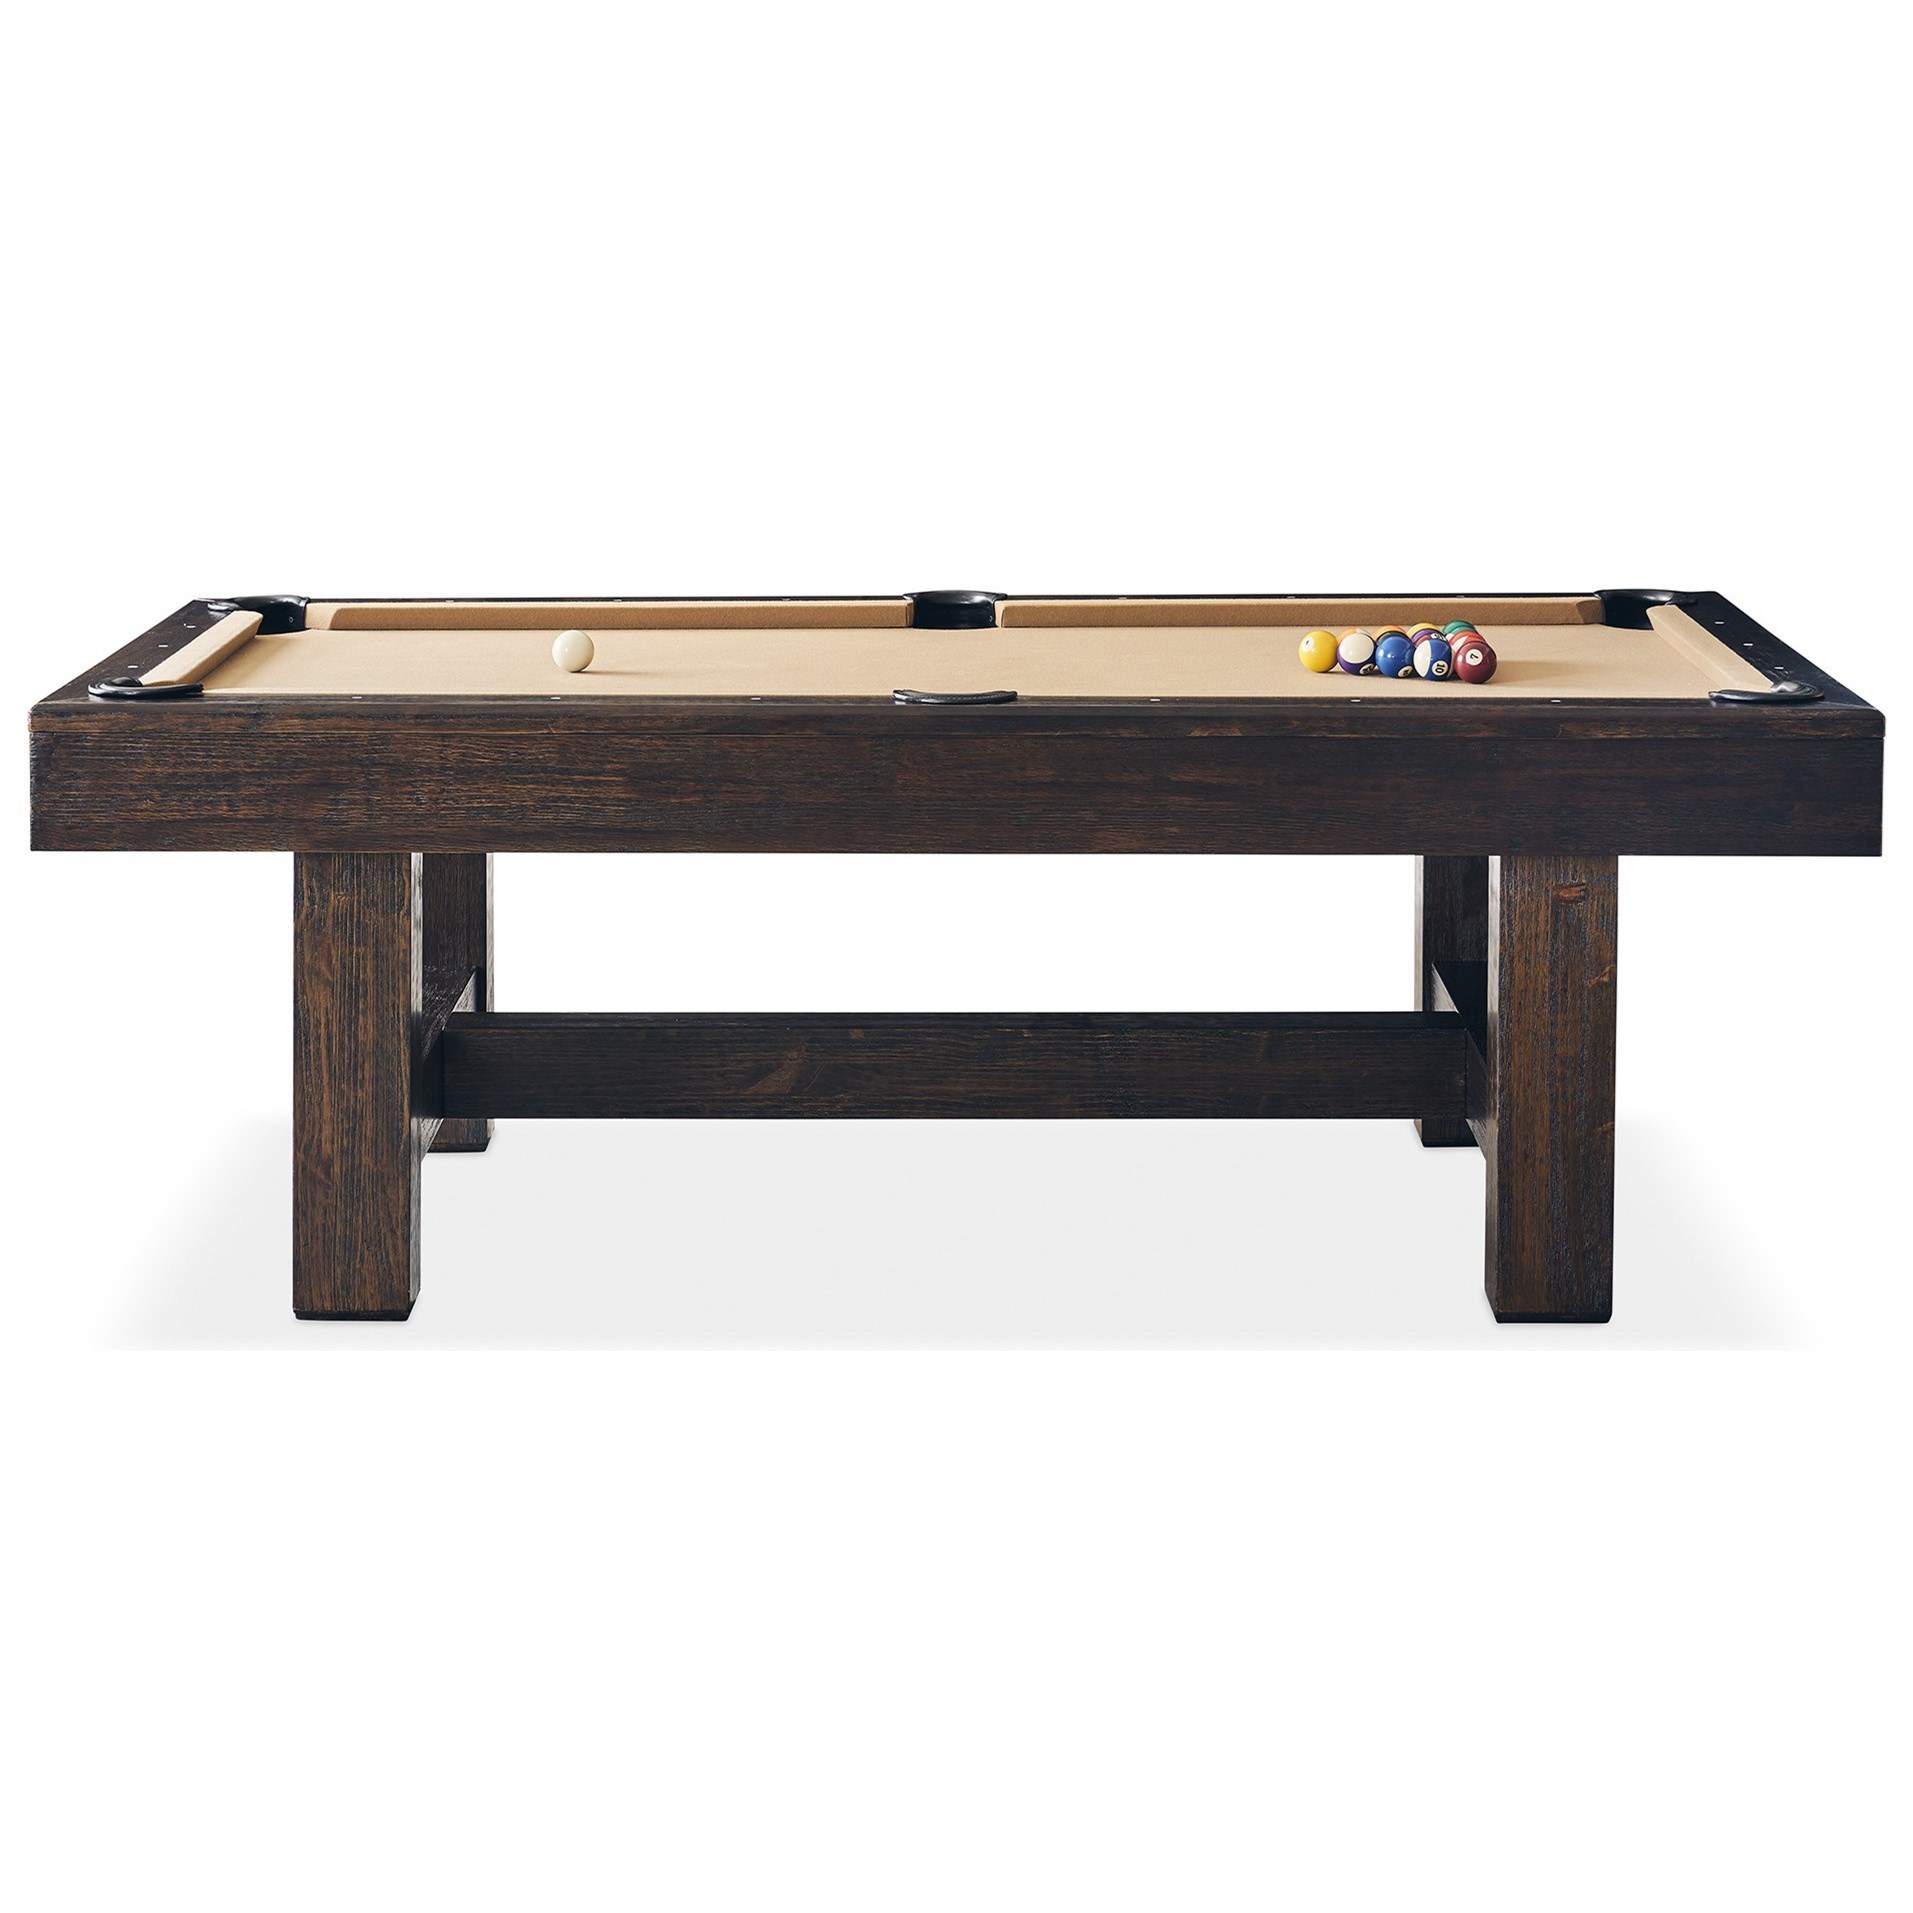 billiard pool table for sale